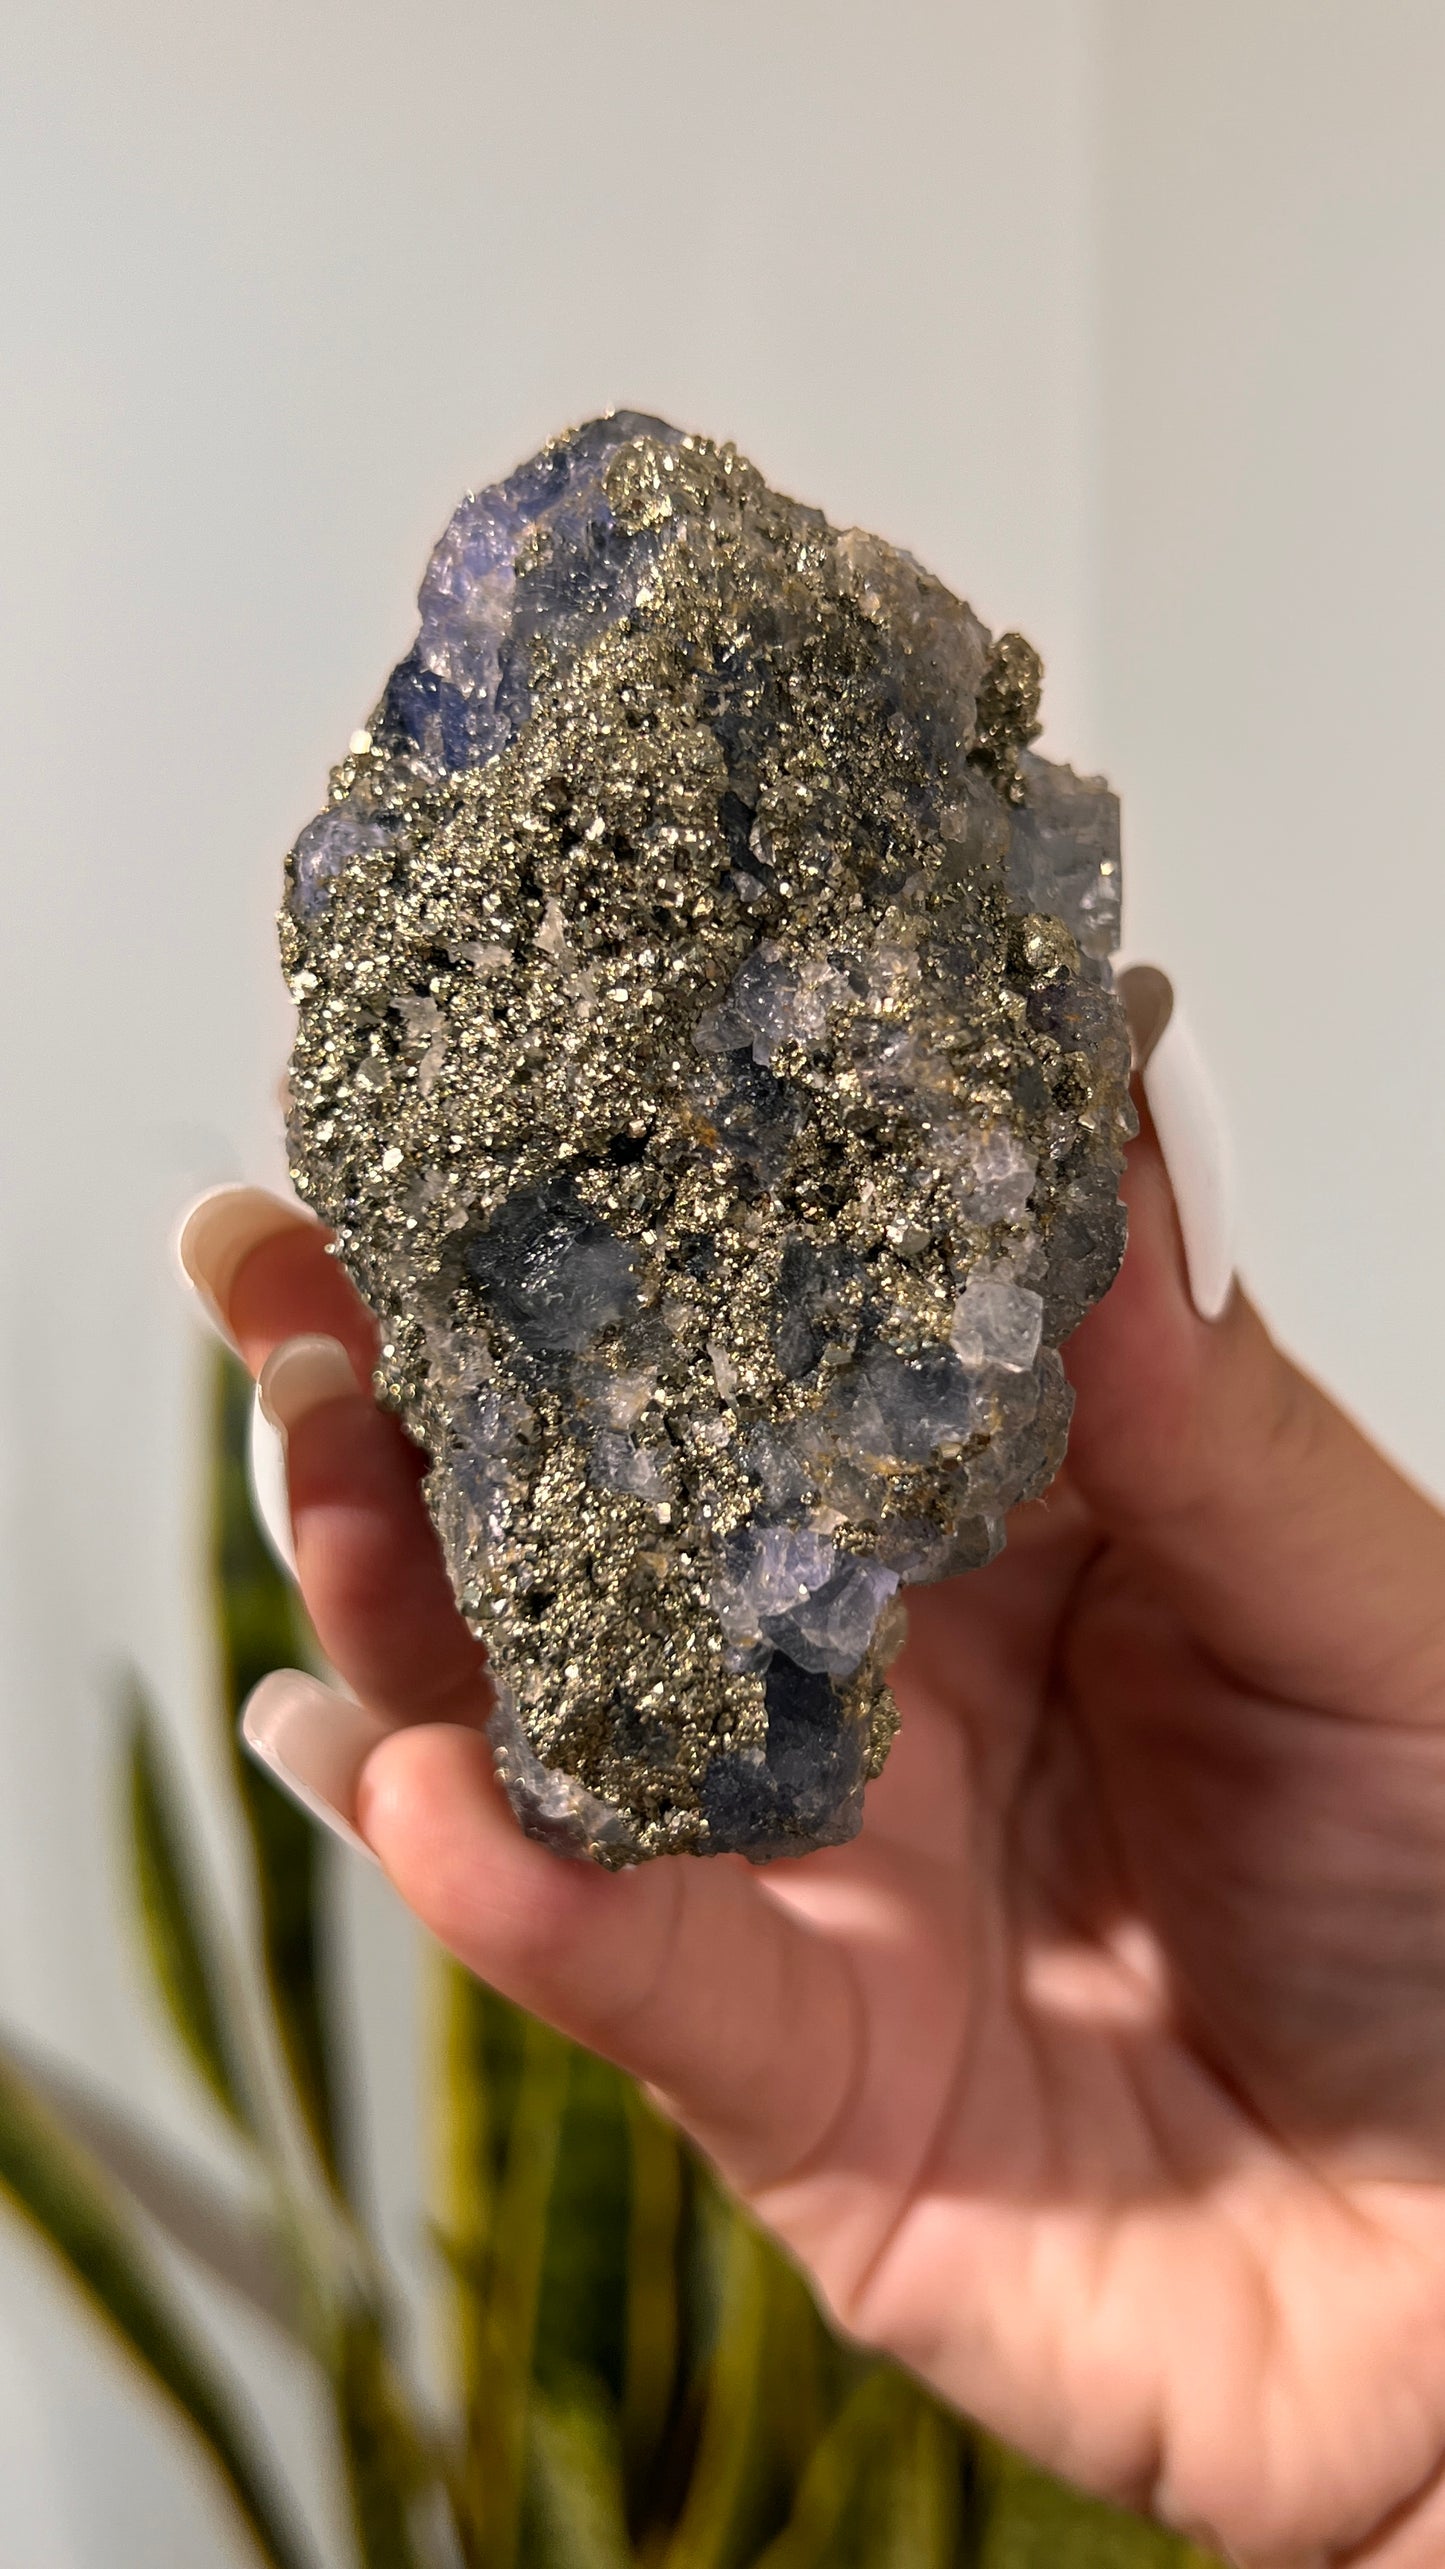 Blue Fluorite and Pyrite Specimen